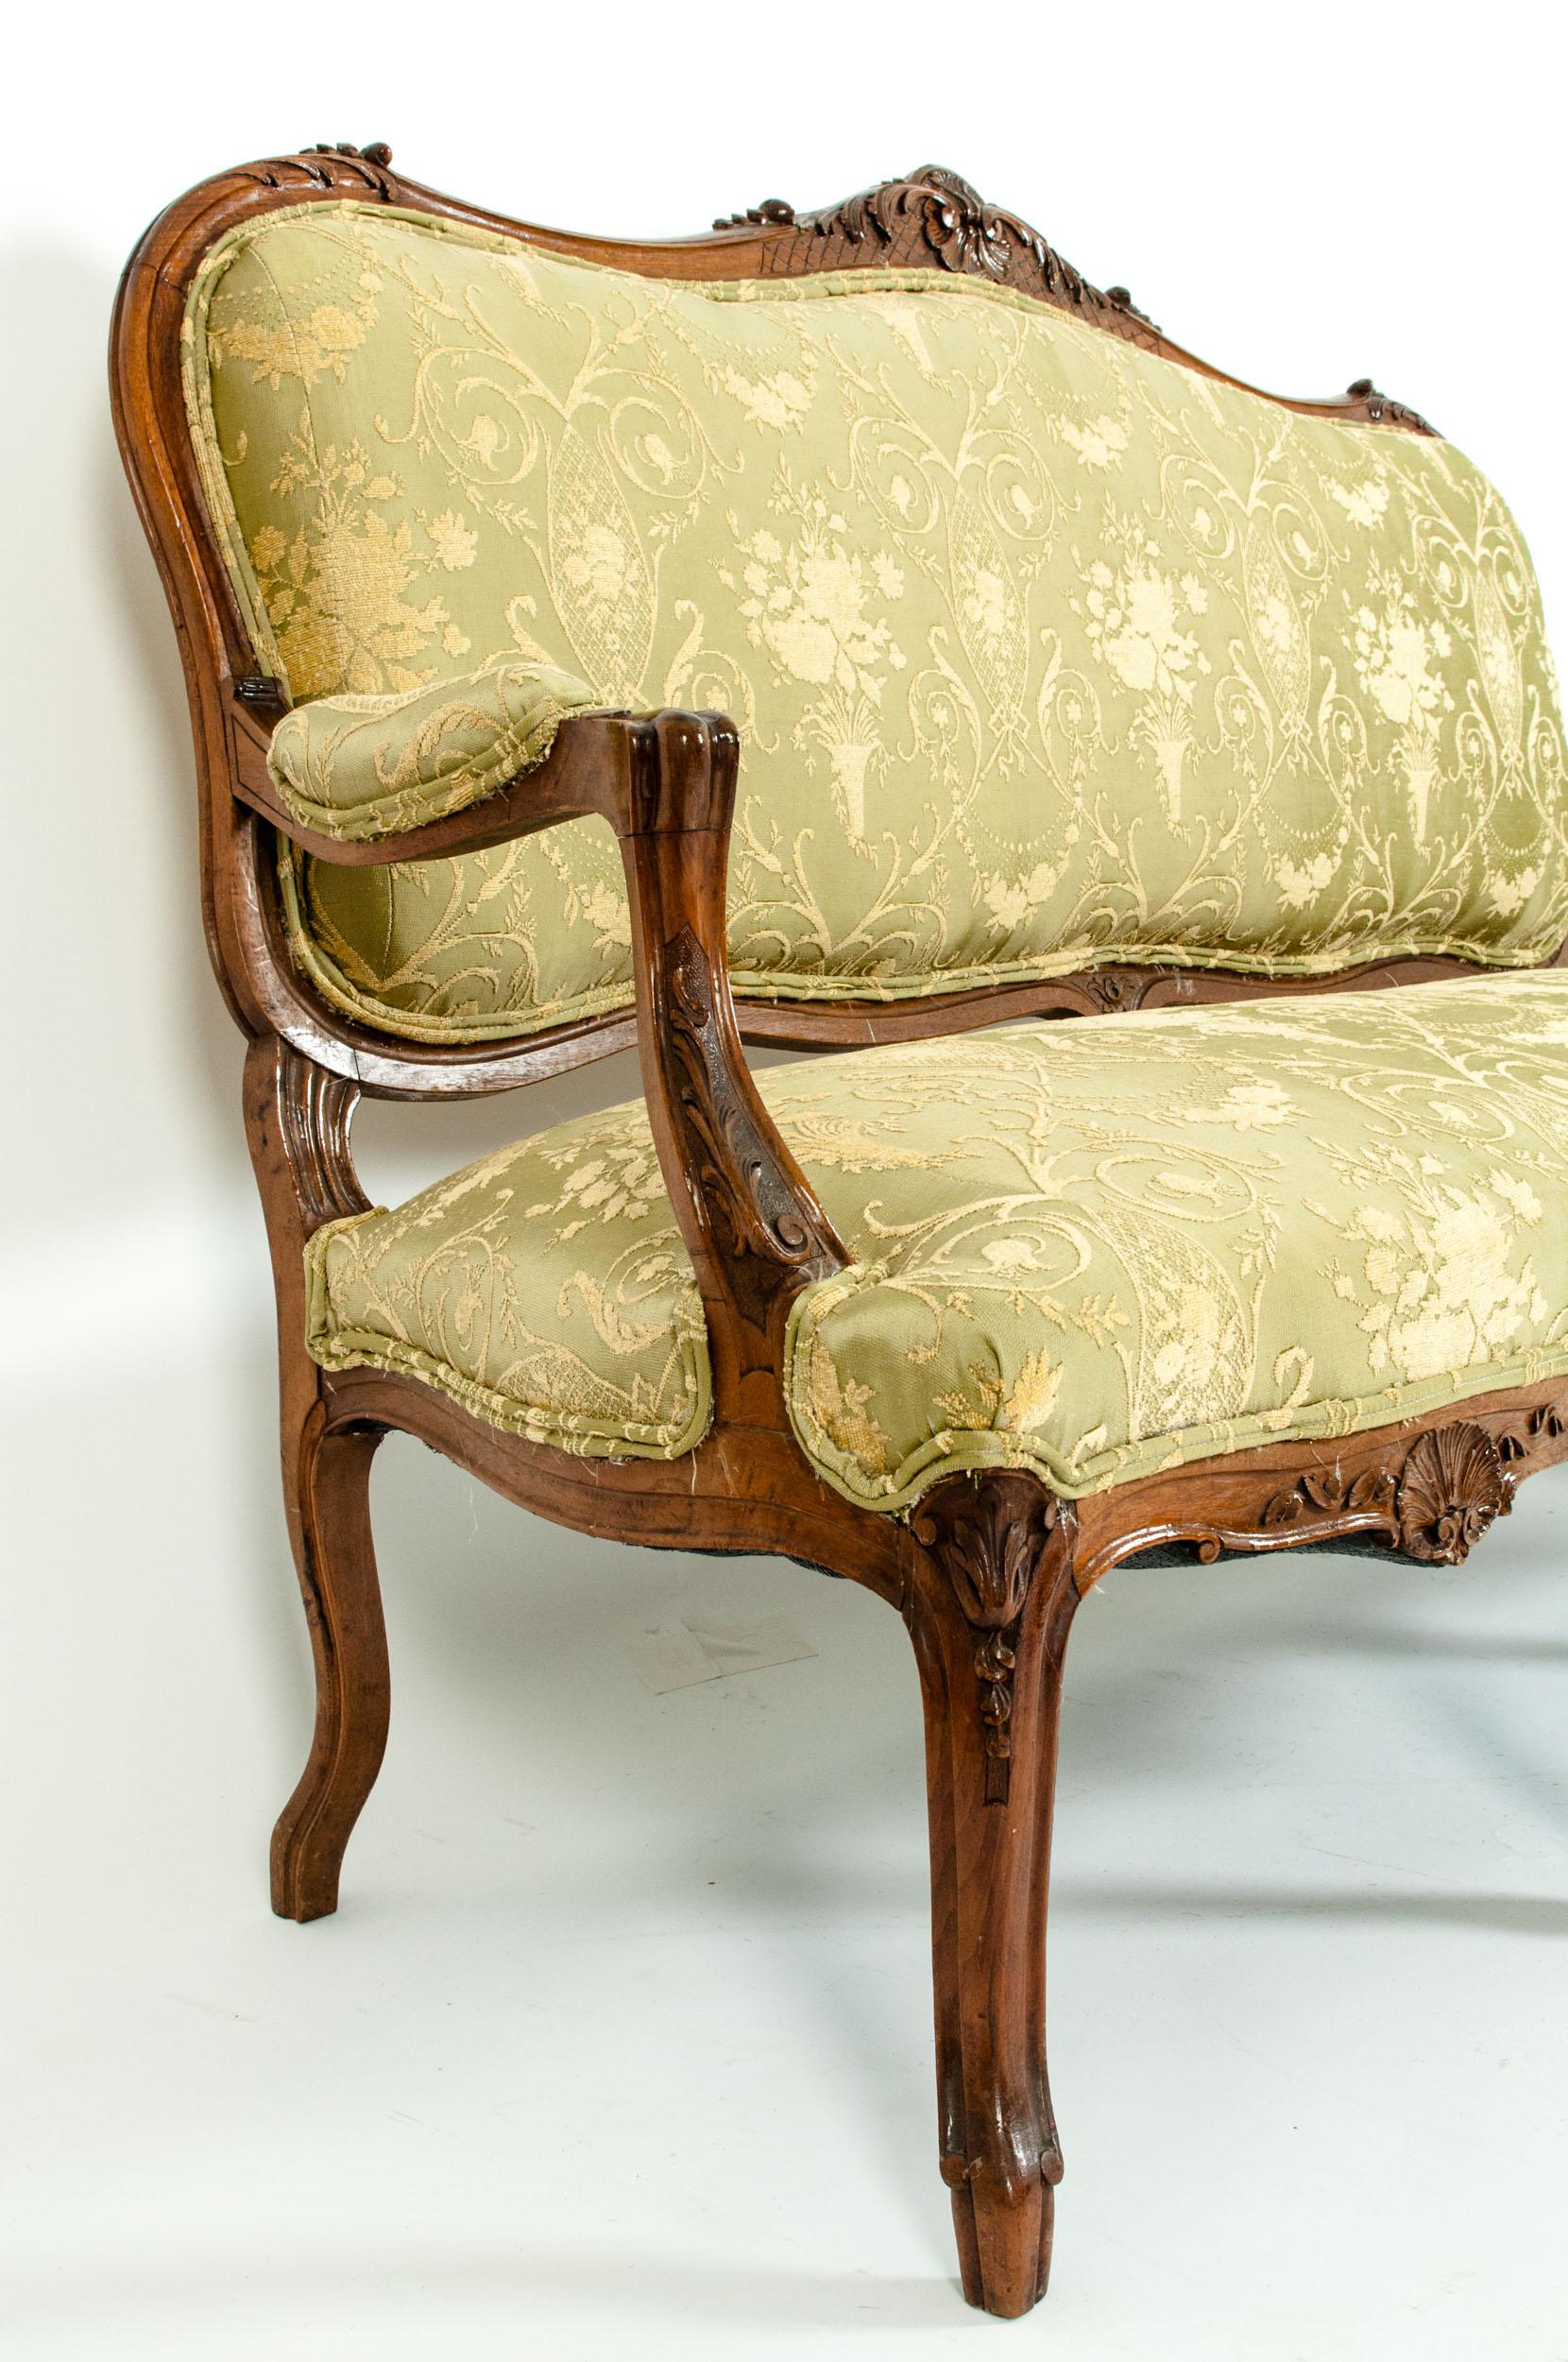 Upholstery Fine Mid-19th Century Mahogany Wood Frame Salon Suite